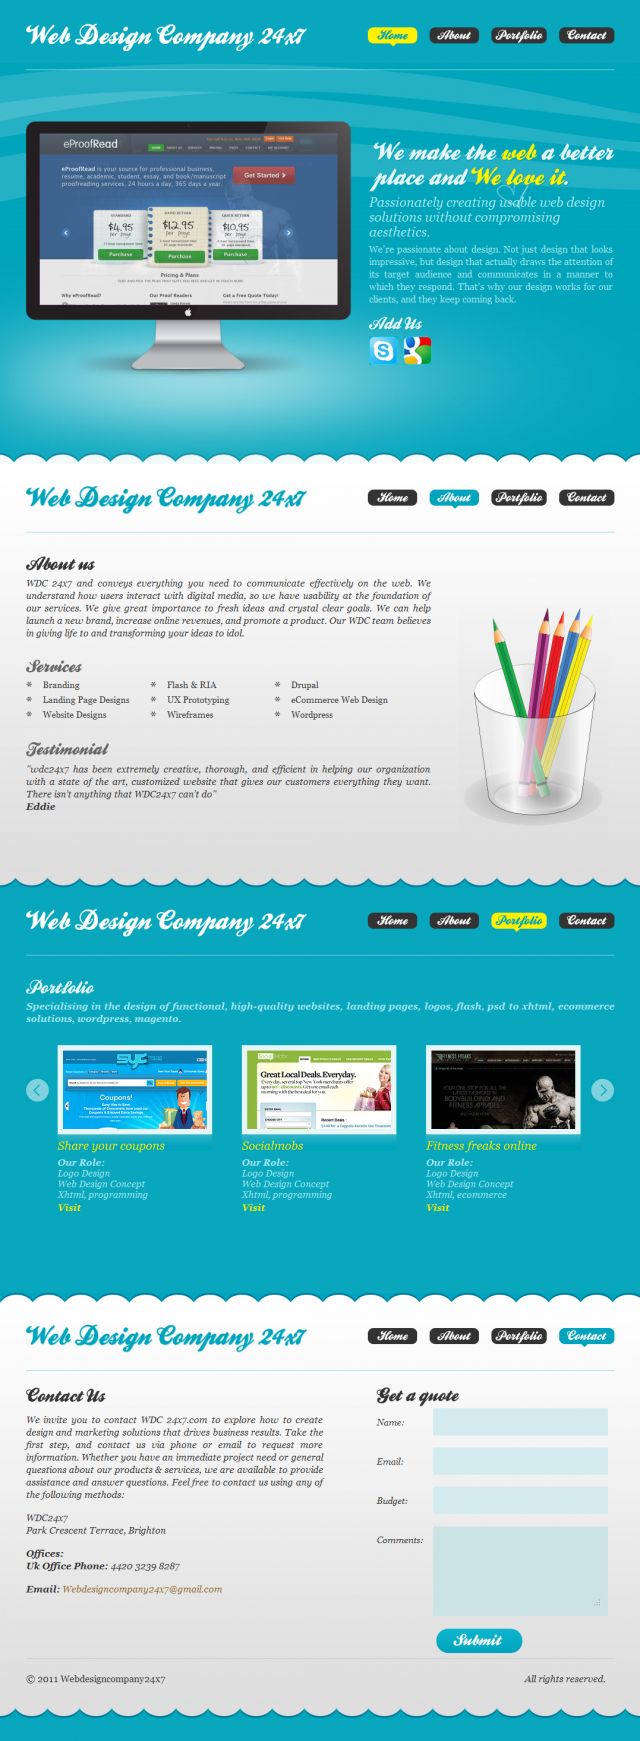 Web Design Company 24x7 screenshot